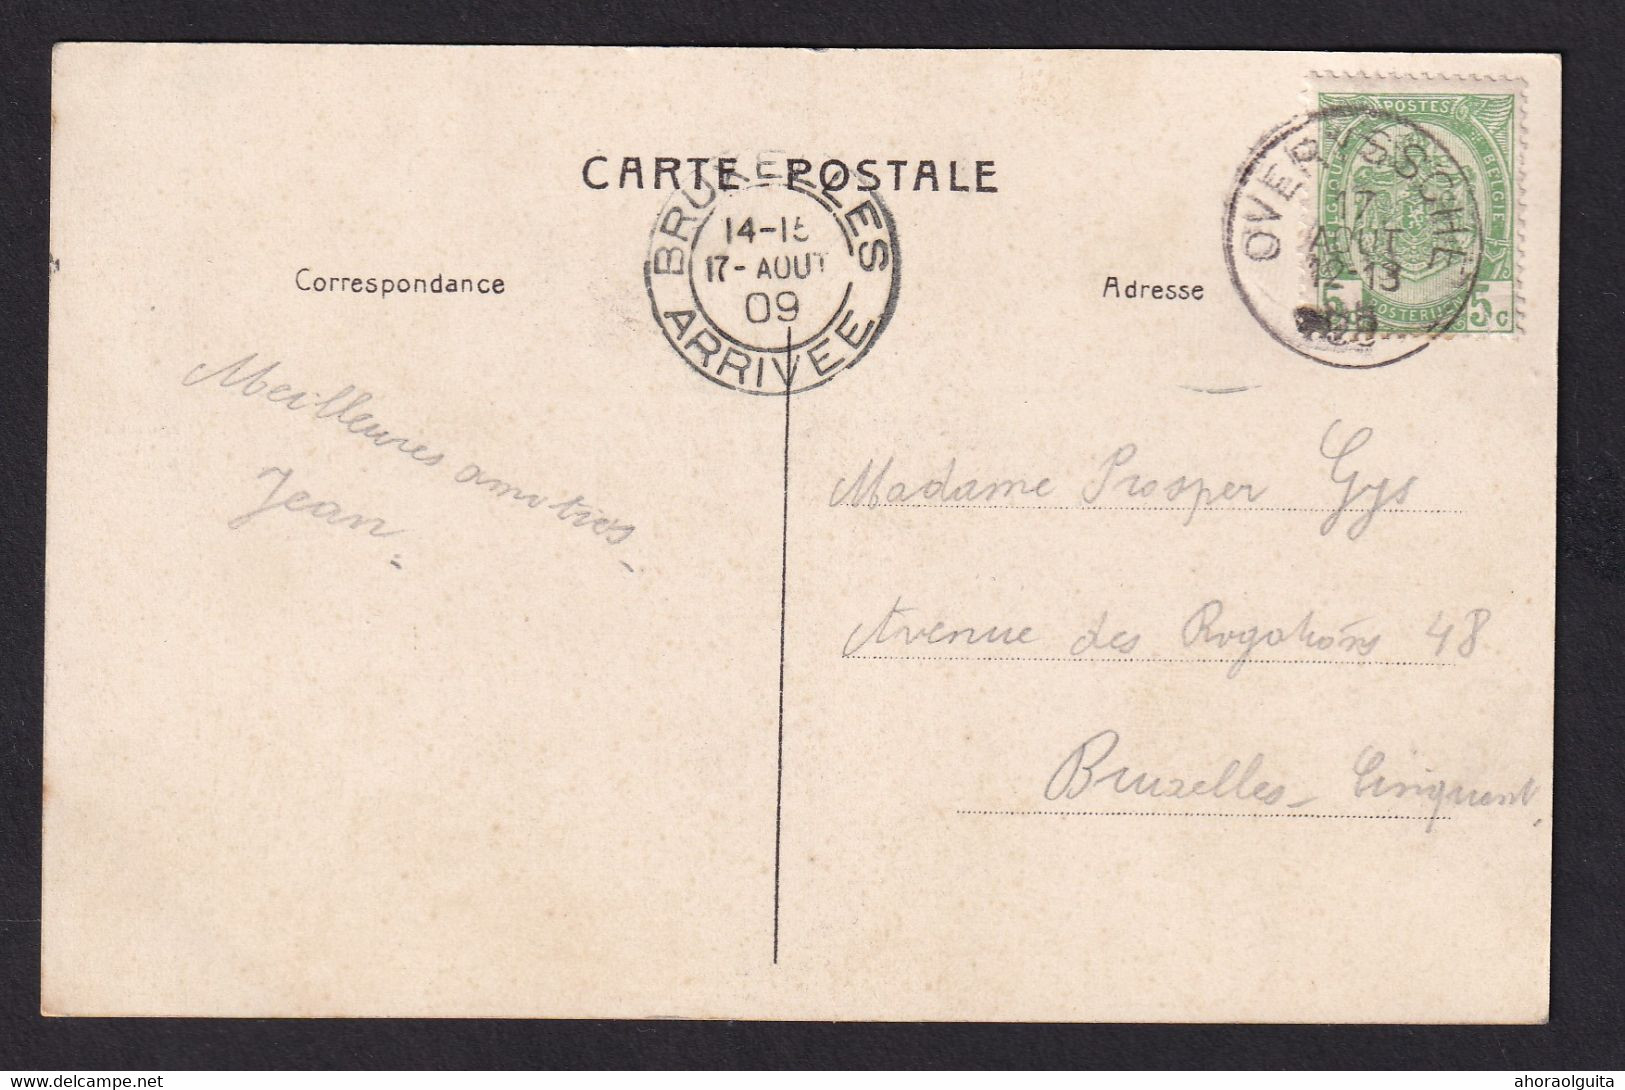 DDBB 880 - Carte-Vue OVERYSSCHE - Maison De Juste Lipse, Edit. Vandendael, Overyssche - TP Armoiries 1909 - Overijse